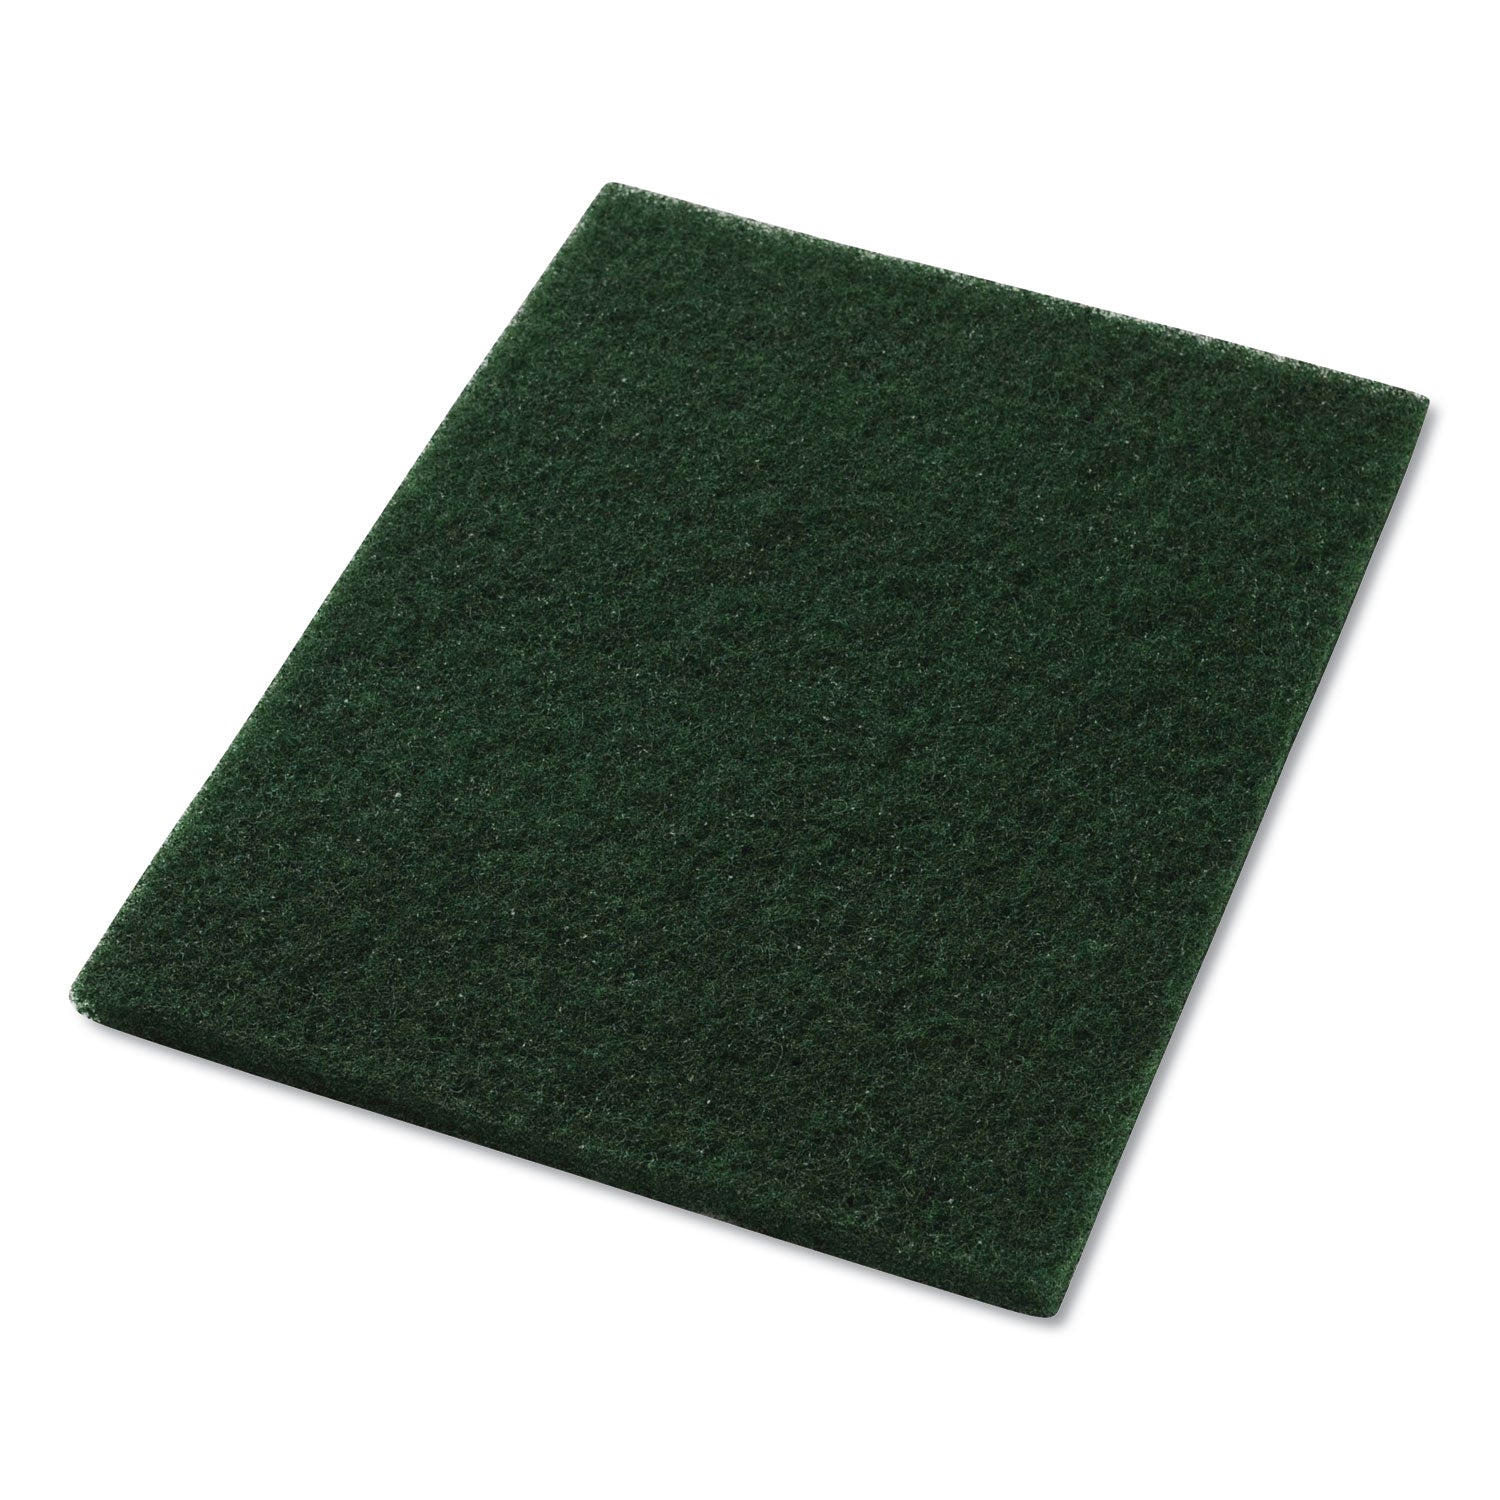 scrubbing-pads-14-x-20-green-5-carton_amf40031420 - 1